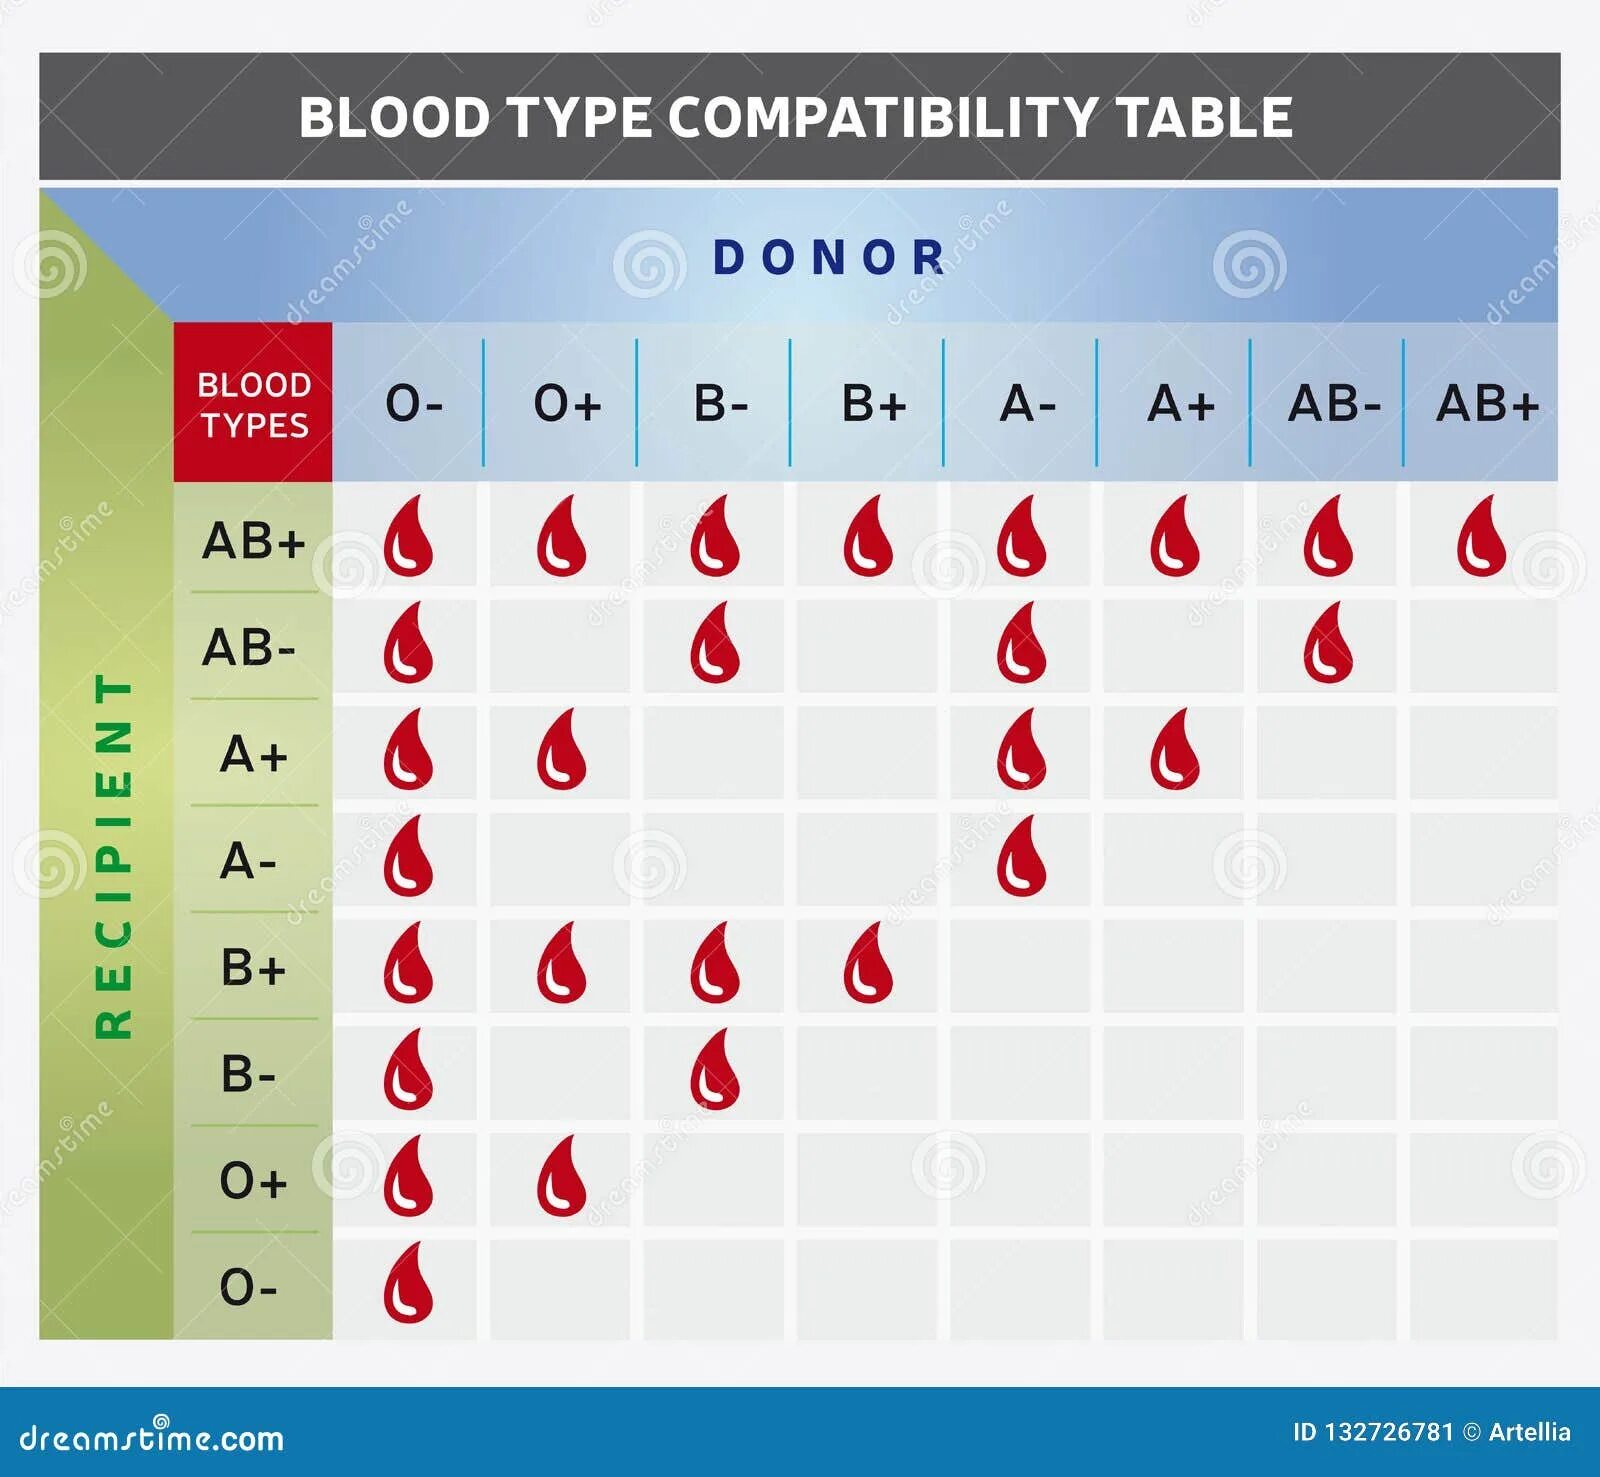 3 группа крови совместимость для зачатия. Совместимость групп крови. Совместимость групп крови родителей. Совместимость по группе крови. Совместимость групп крови для зачатия.